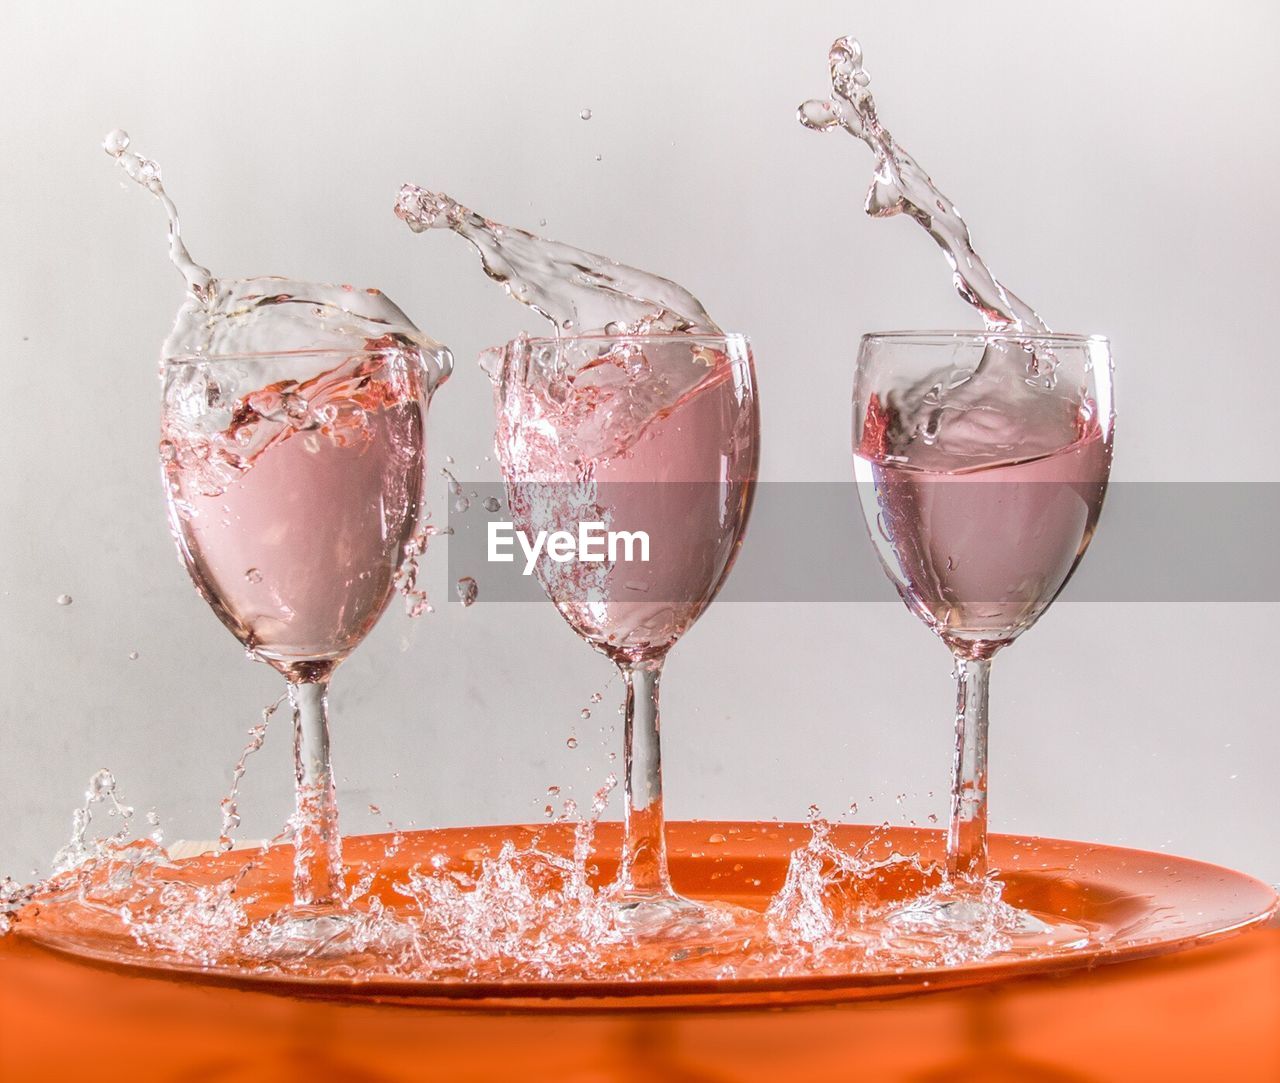 Splash wineglass against white background